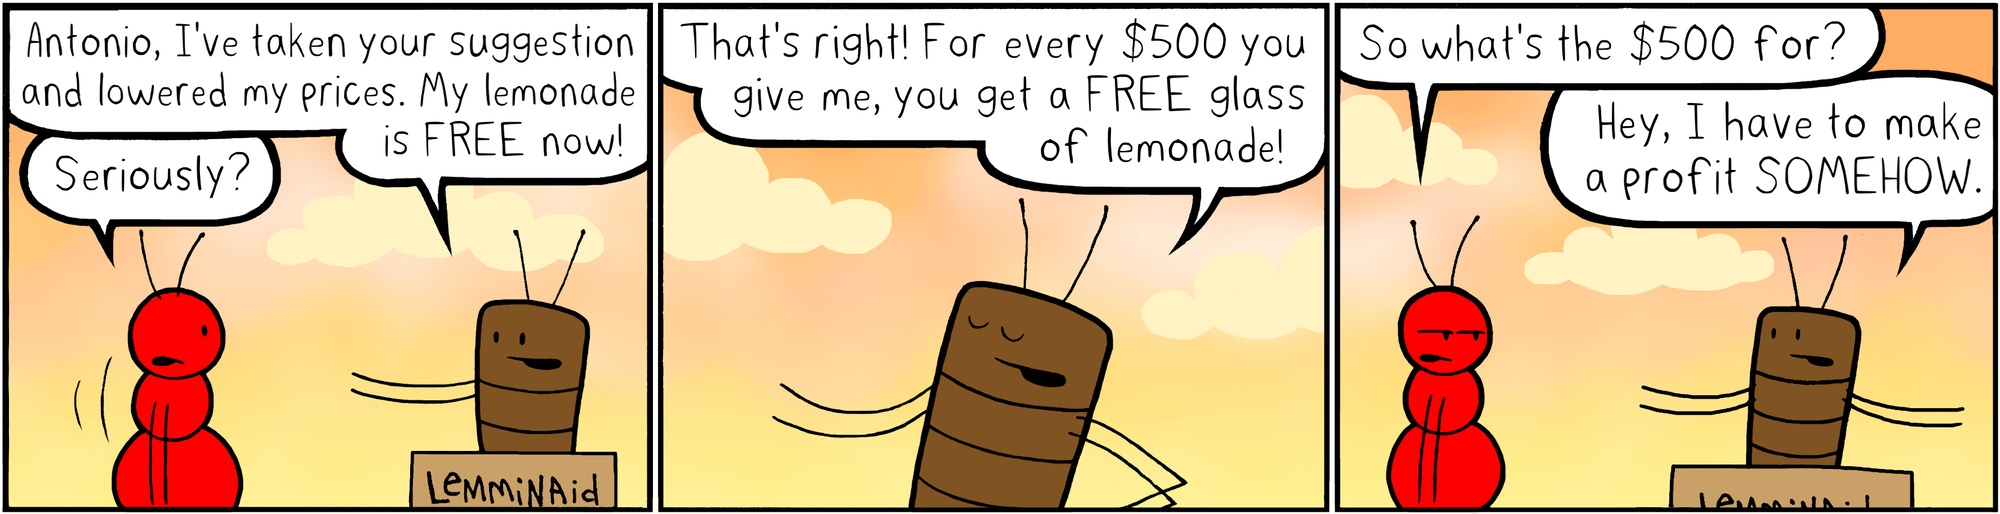 Lemonade Stand 4